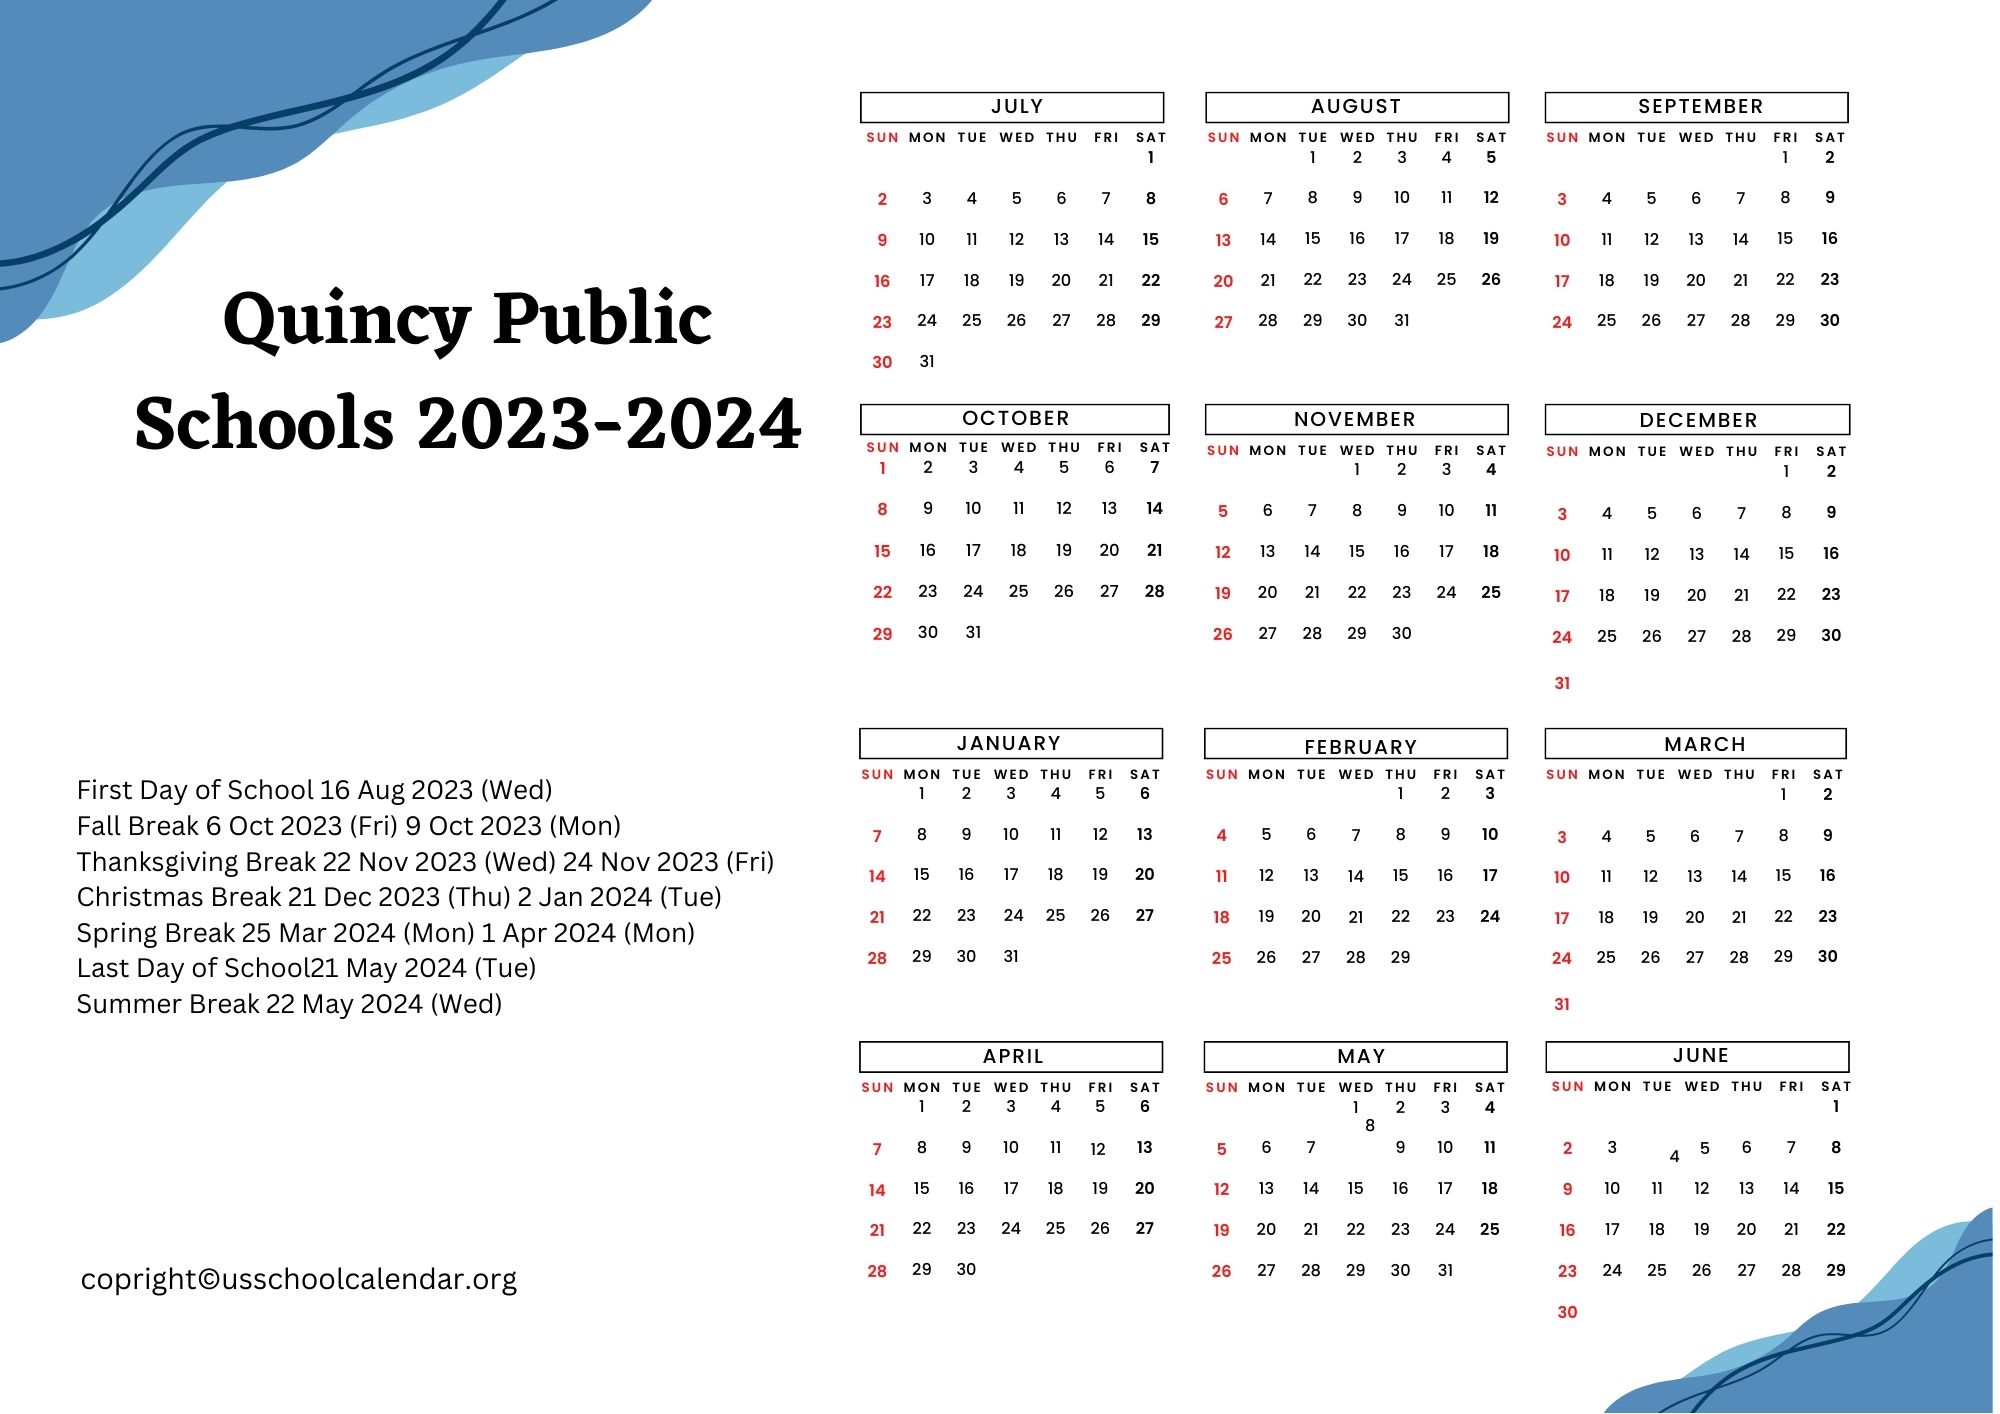 Quincy Public Schools Calendar with Holidays 2023 2024